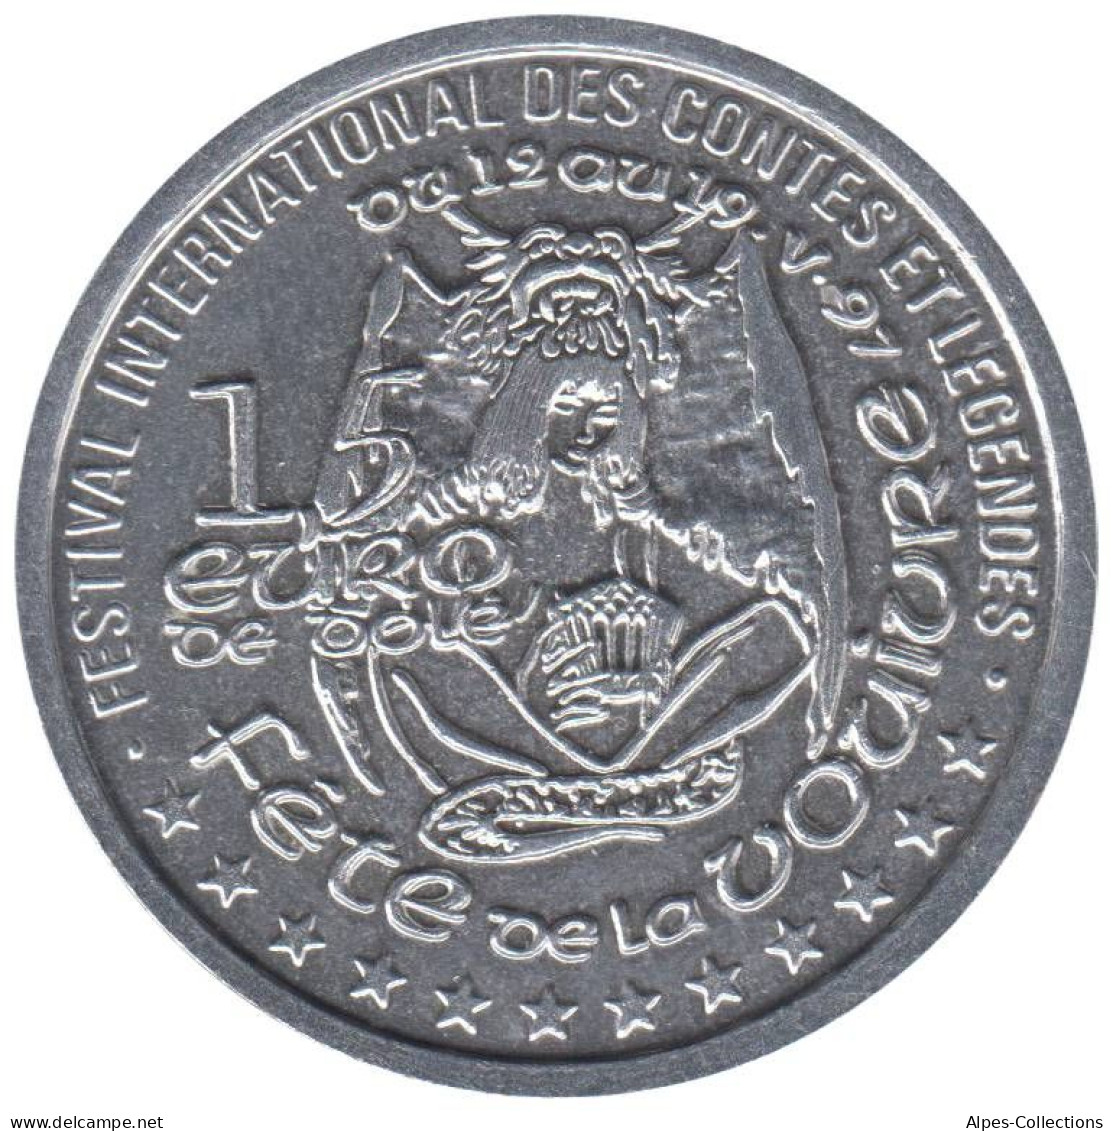 DOLE - EU0015.3 - 1,5 EURO DES VILLES - Réf: NR - 1997 - Euros De Las Ciudades